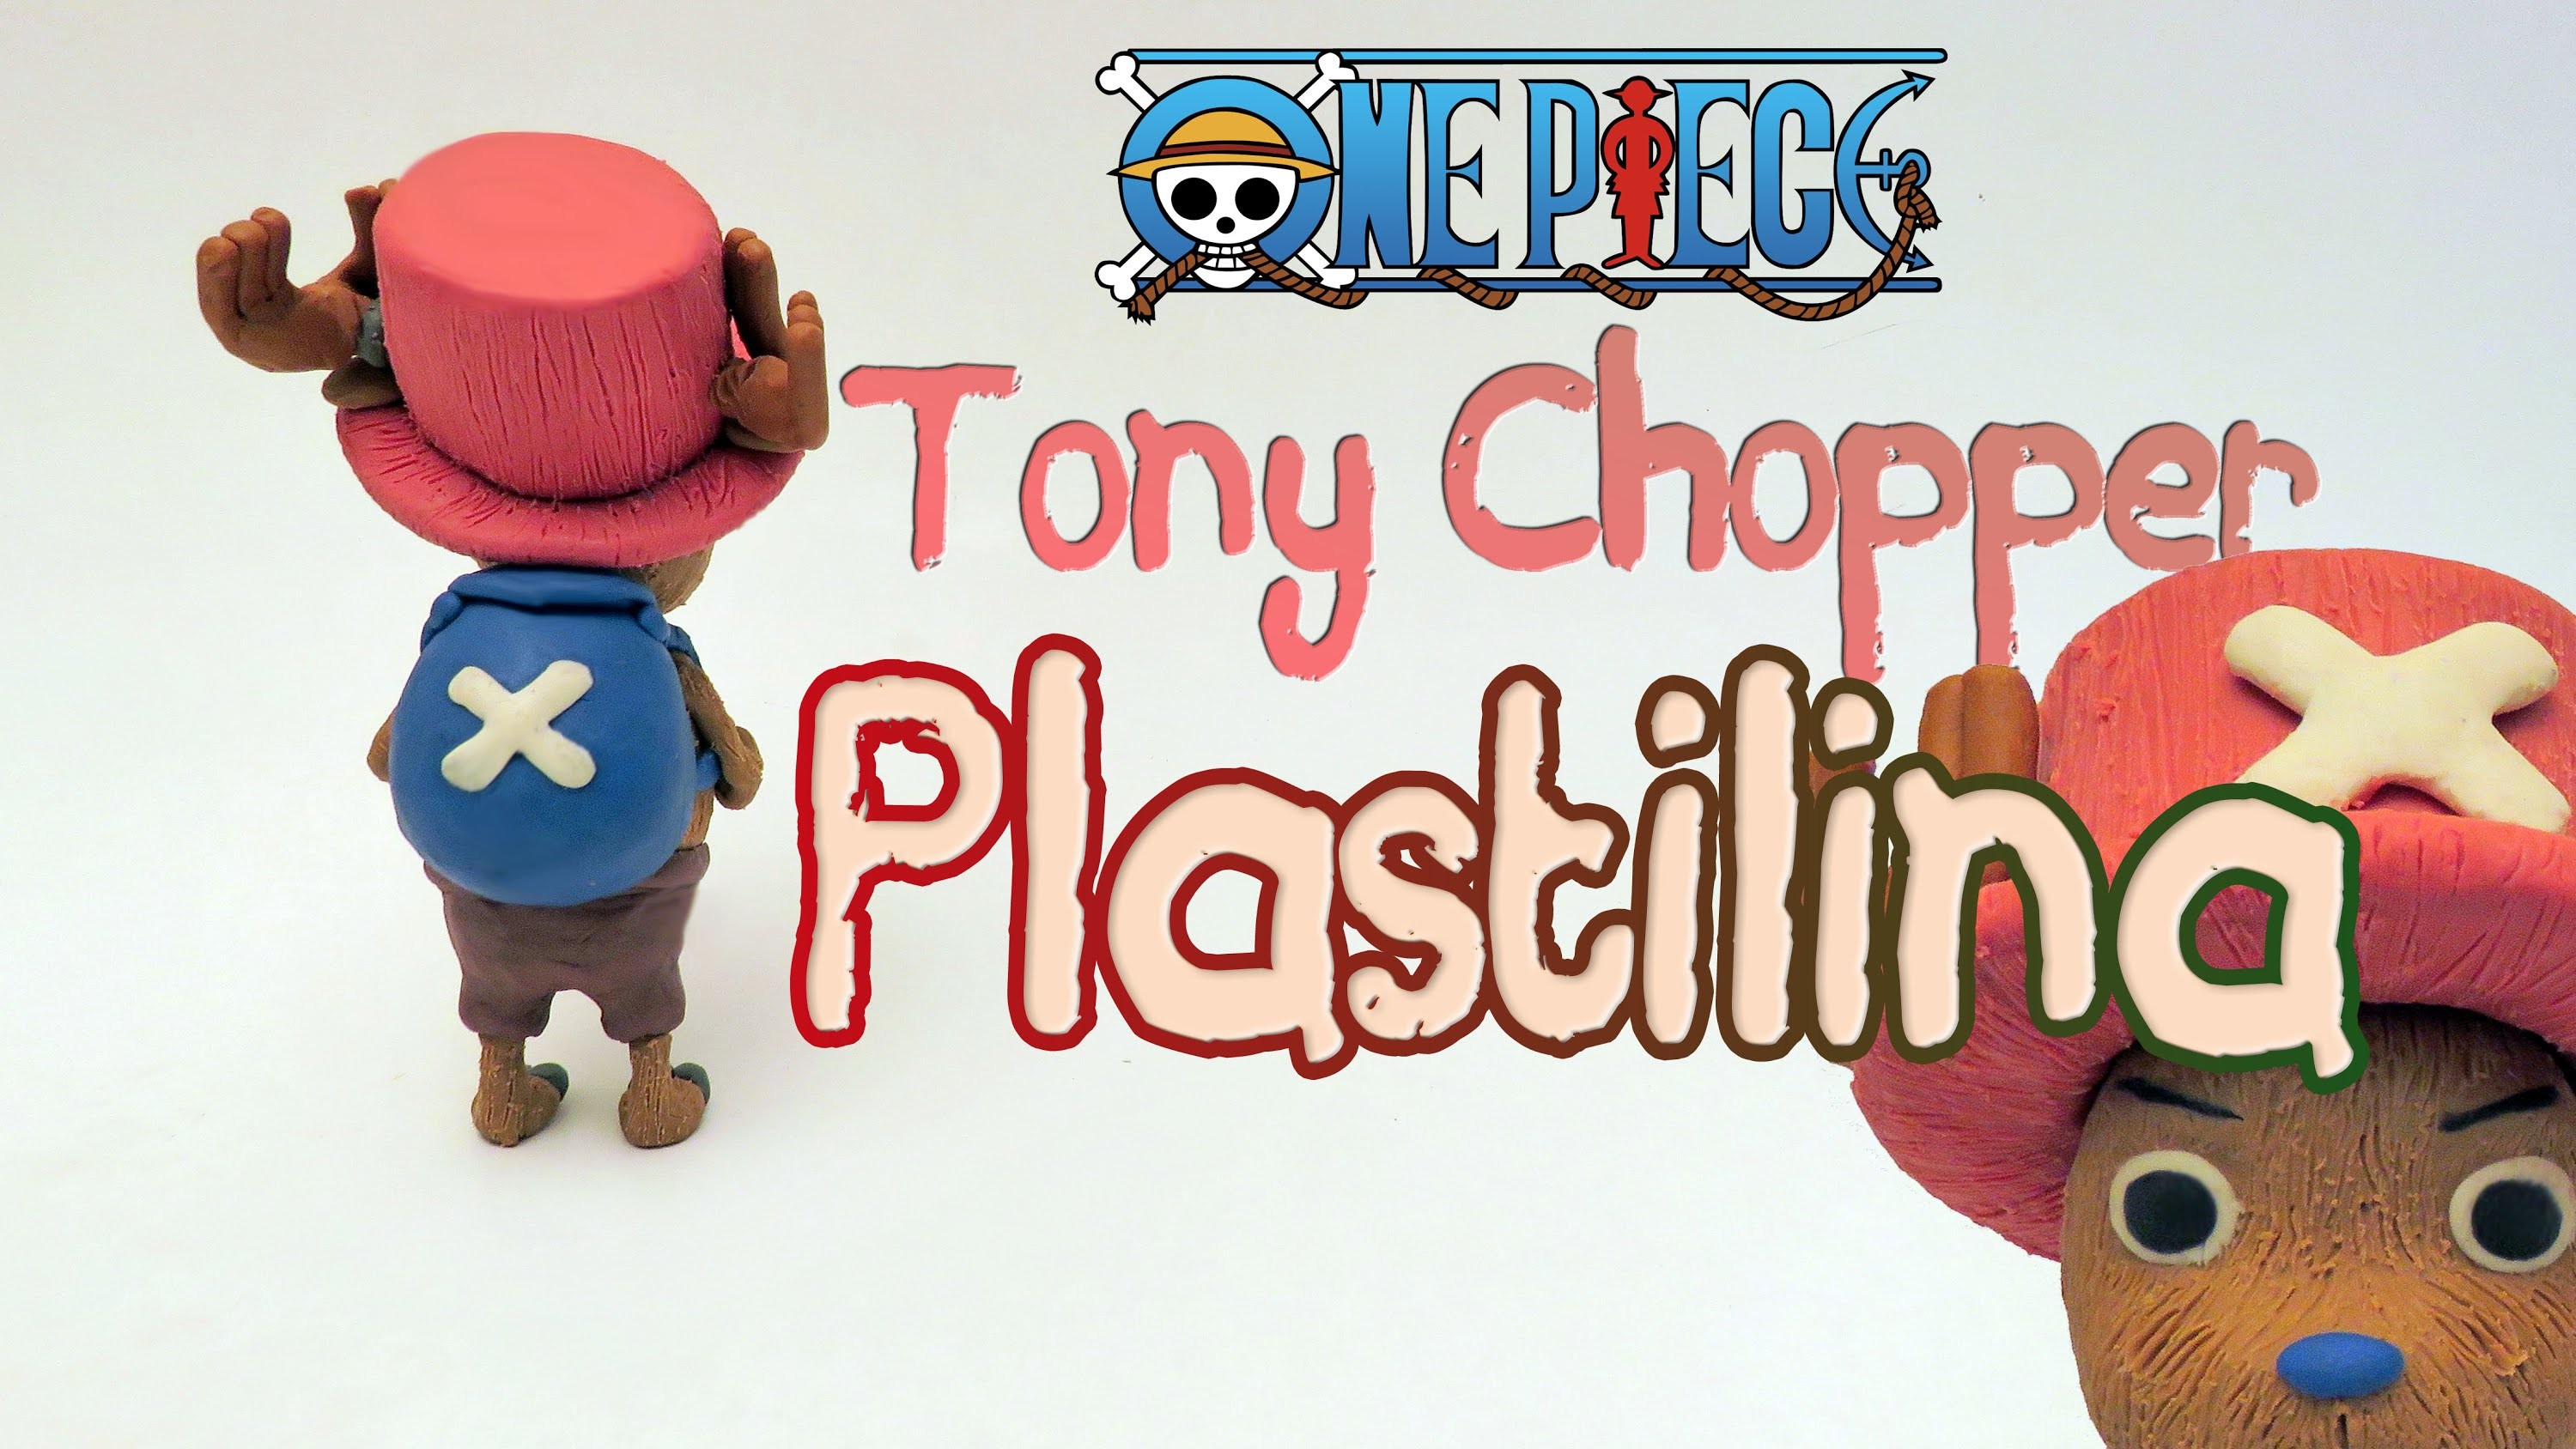 One Piece - Tutorial como hacer a Tony Chopper en plastilina porcelana fria clay